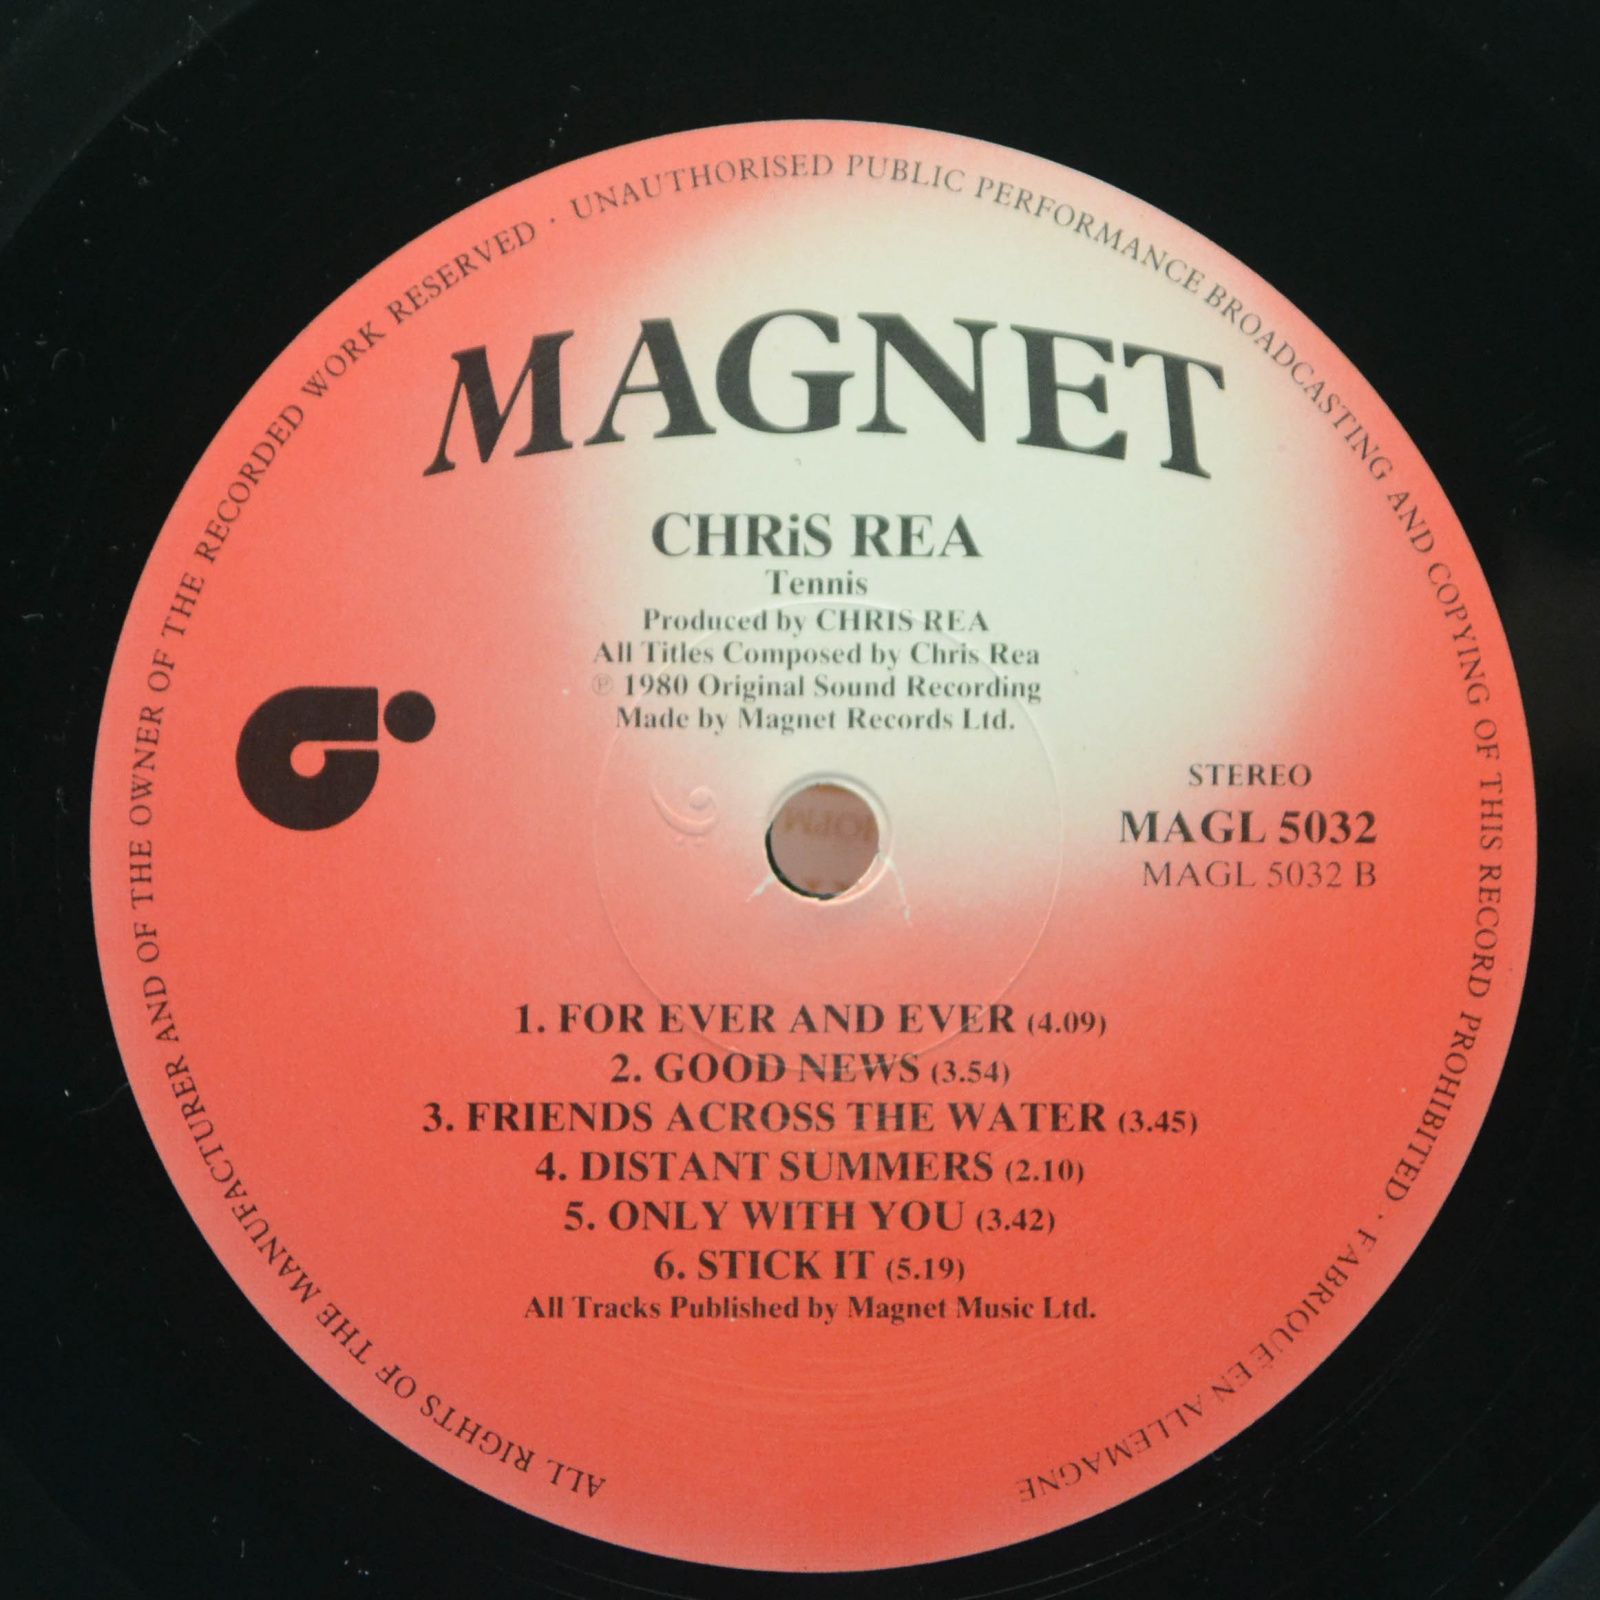 Chris Rea — Tennis, 1983